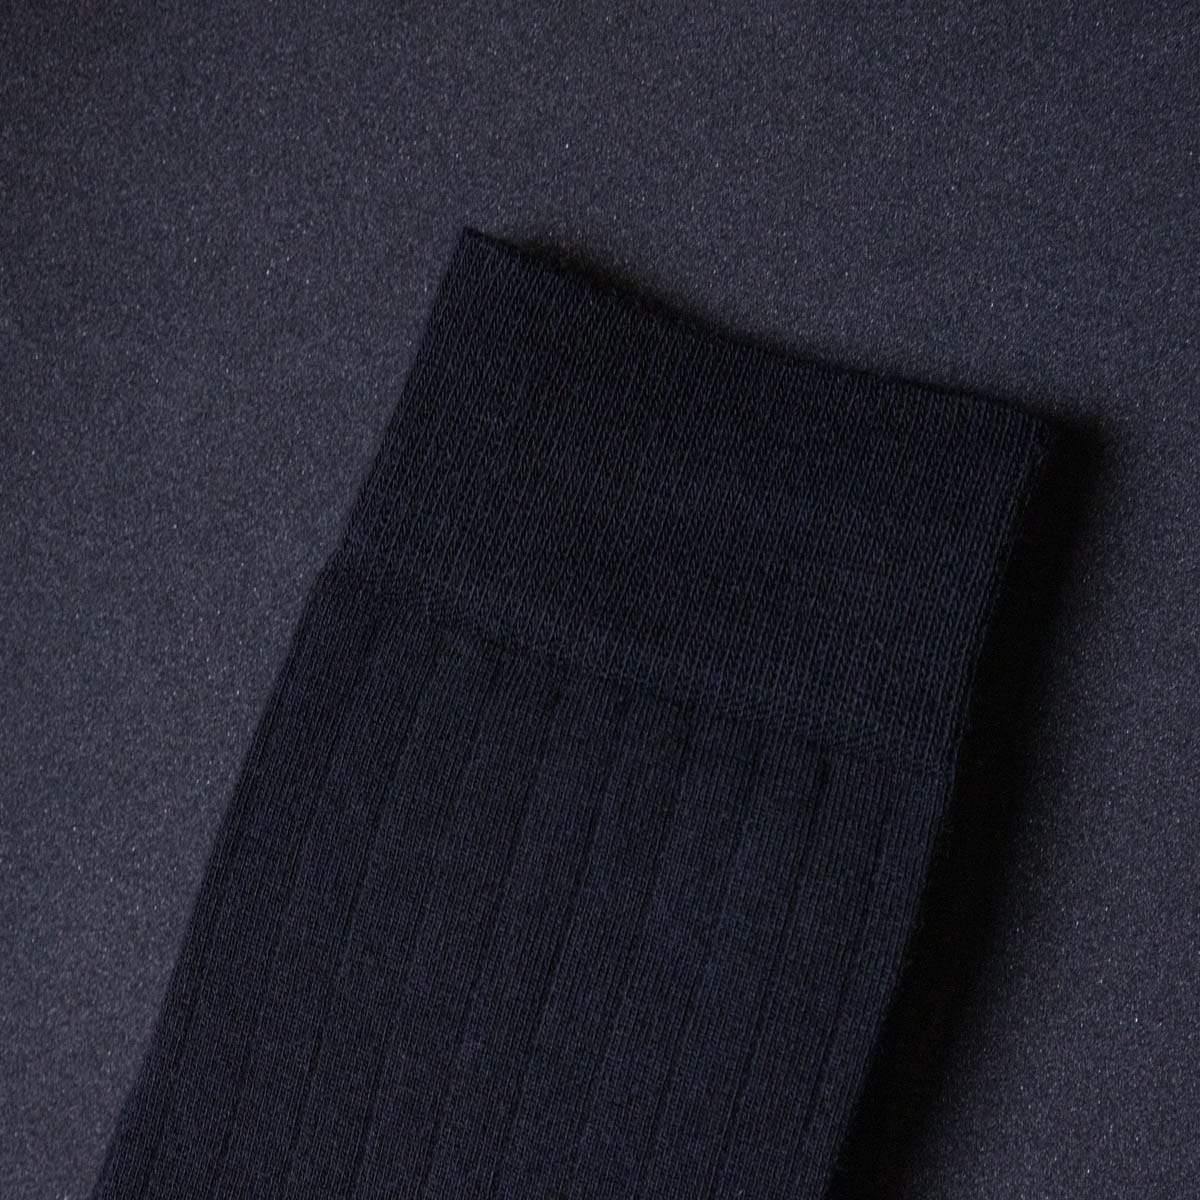 Elegant Cashmere blend dress socks - Black Knight - Cochic